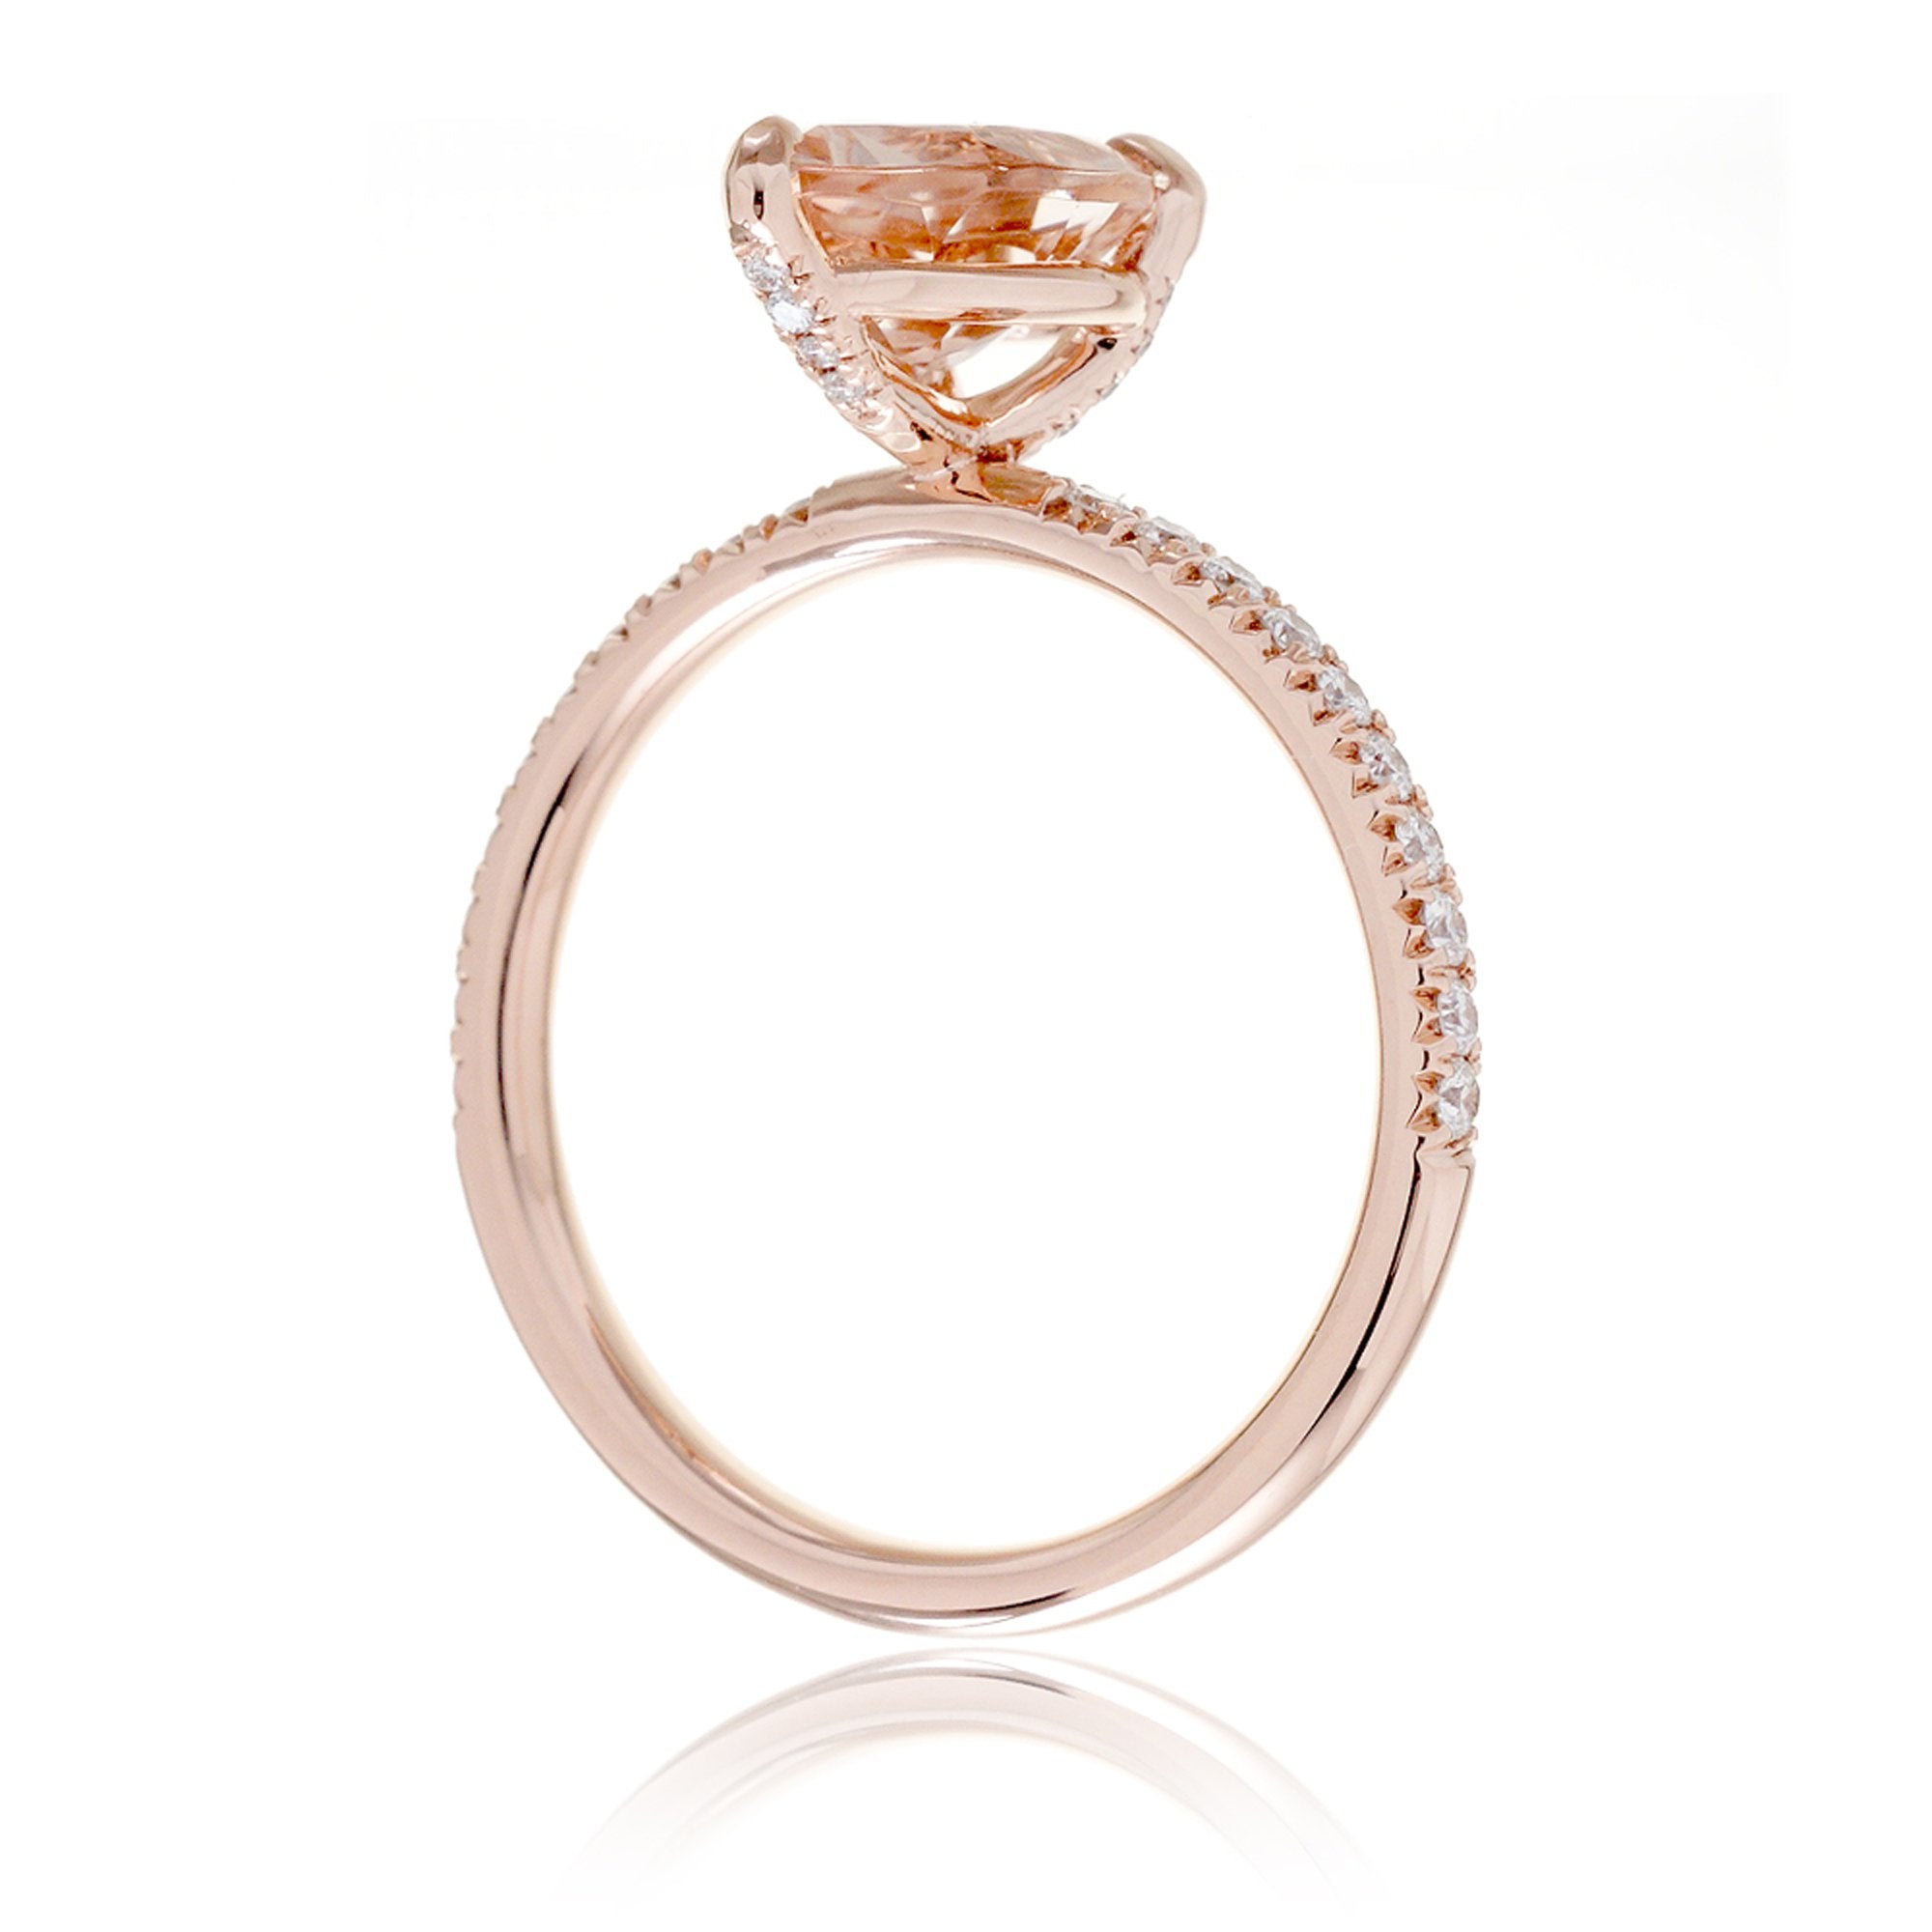 Pear morganite diamond band engagement ring rose gold - The Ava